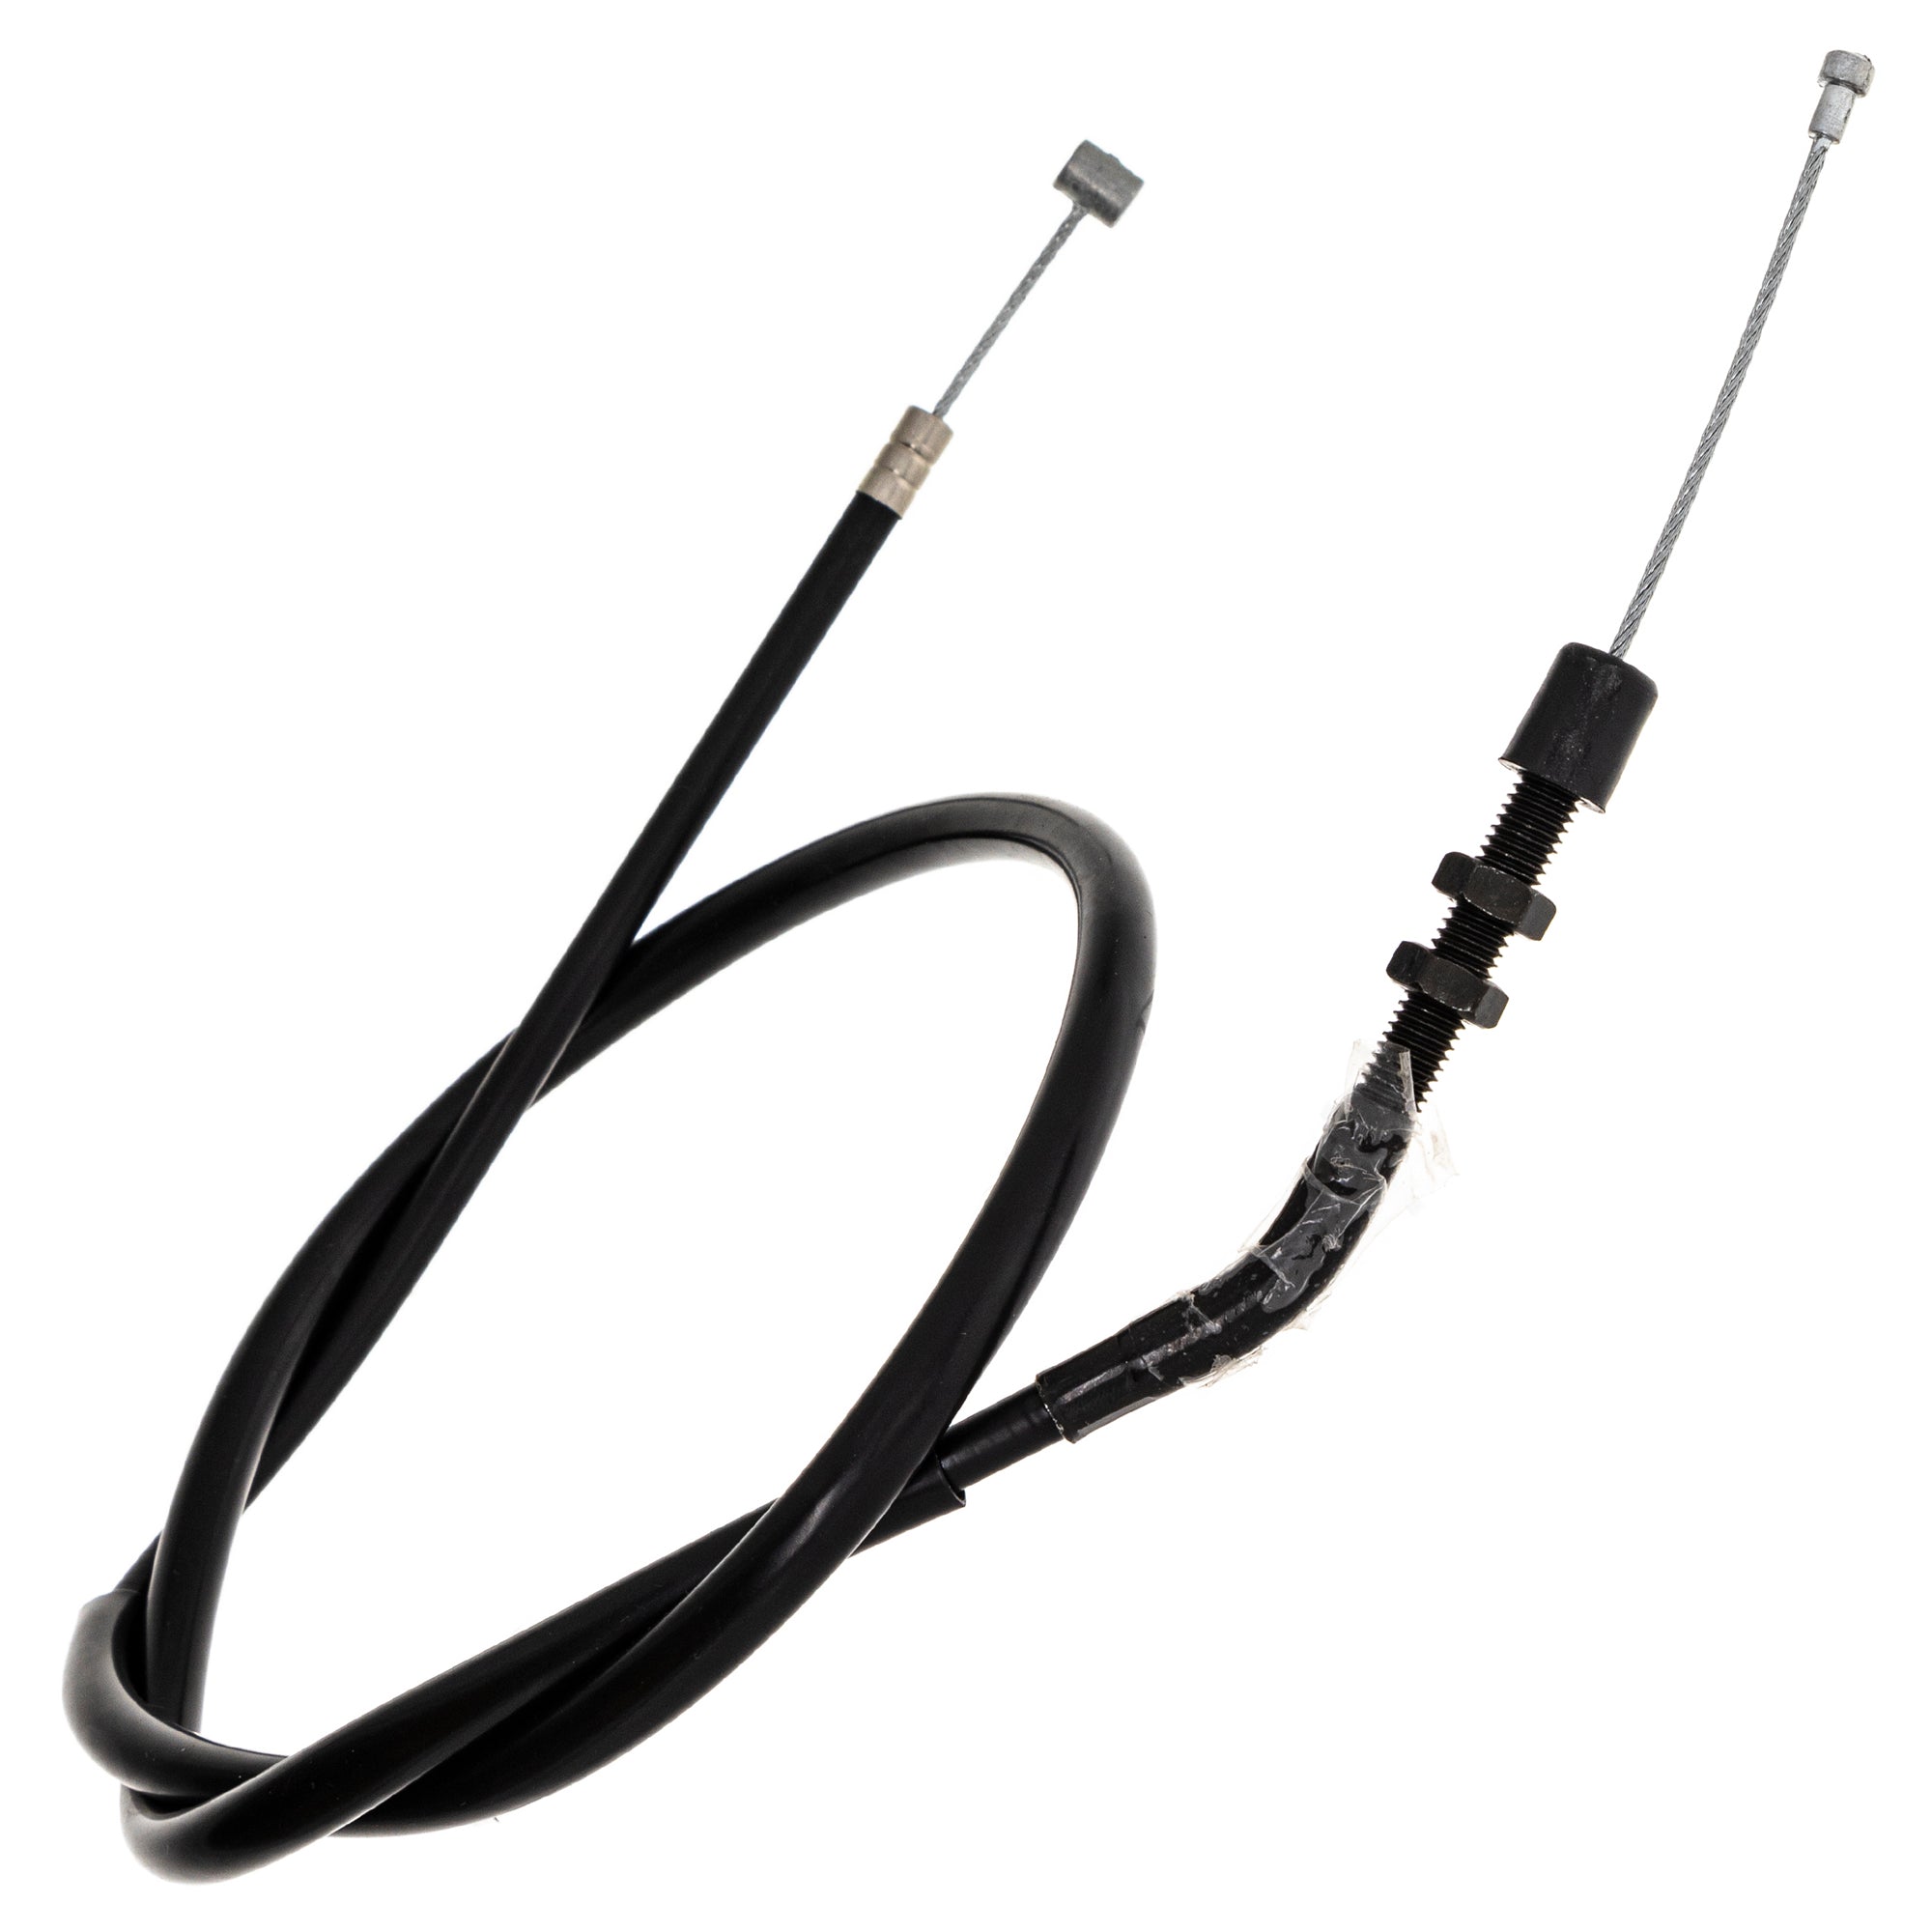 Clutch Cable for Honda Sportrax 400 TRX400EX 22870-HN1-000 ATV